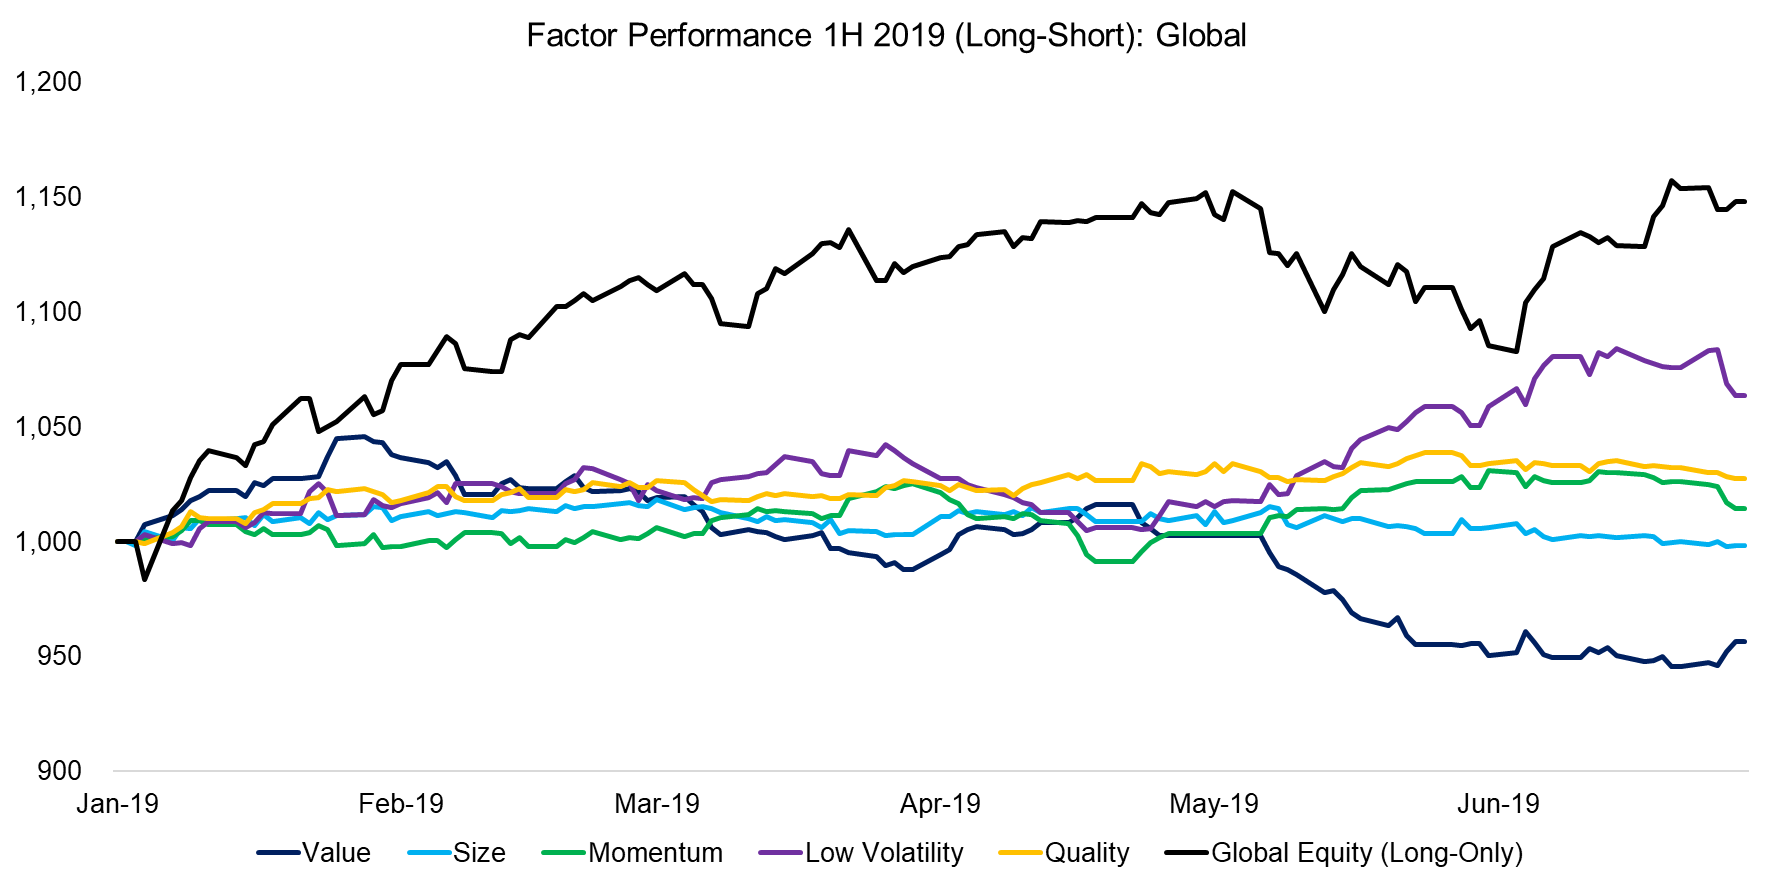 Factor Performance 1H 2019 (Long-Short) Global